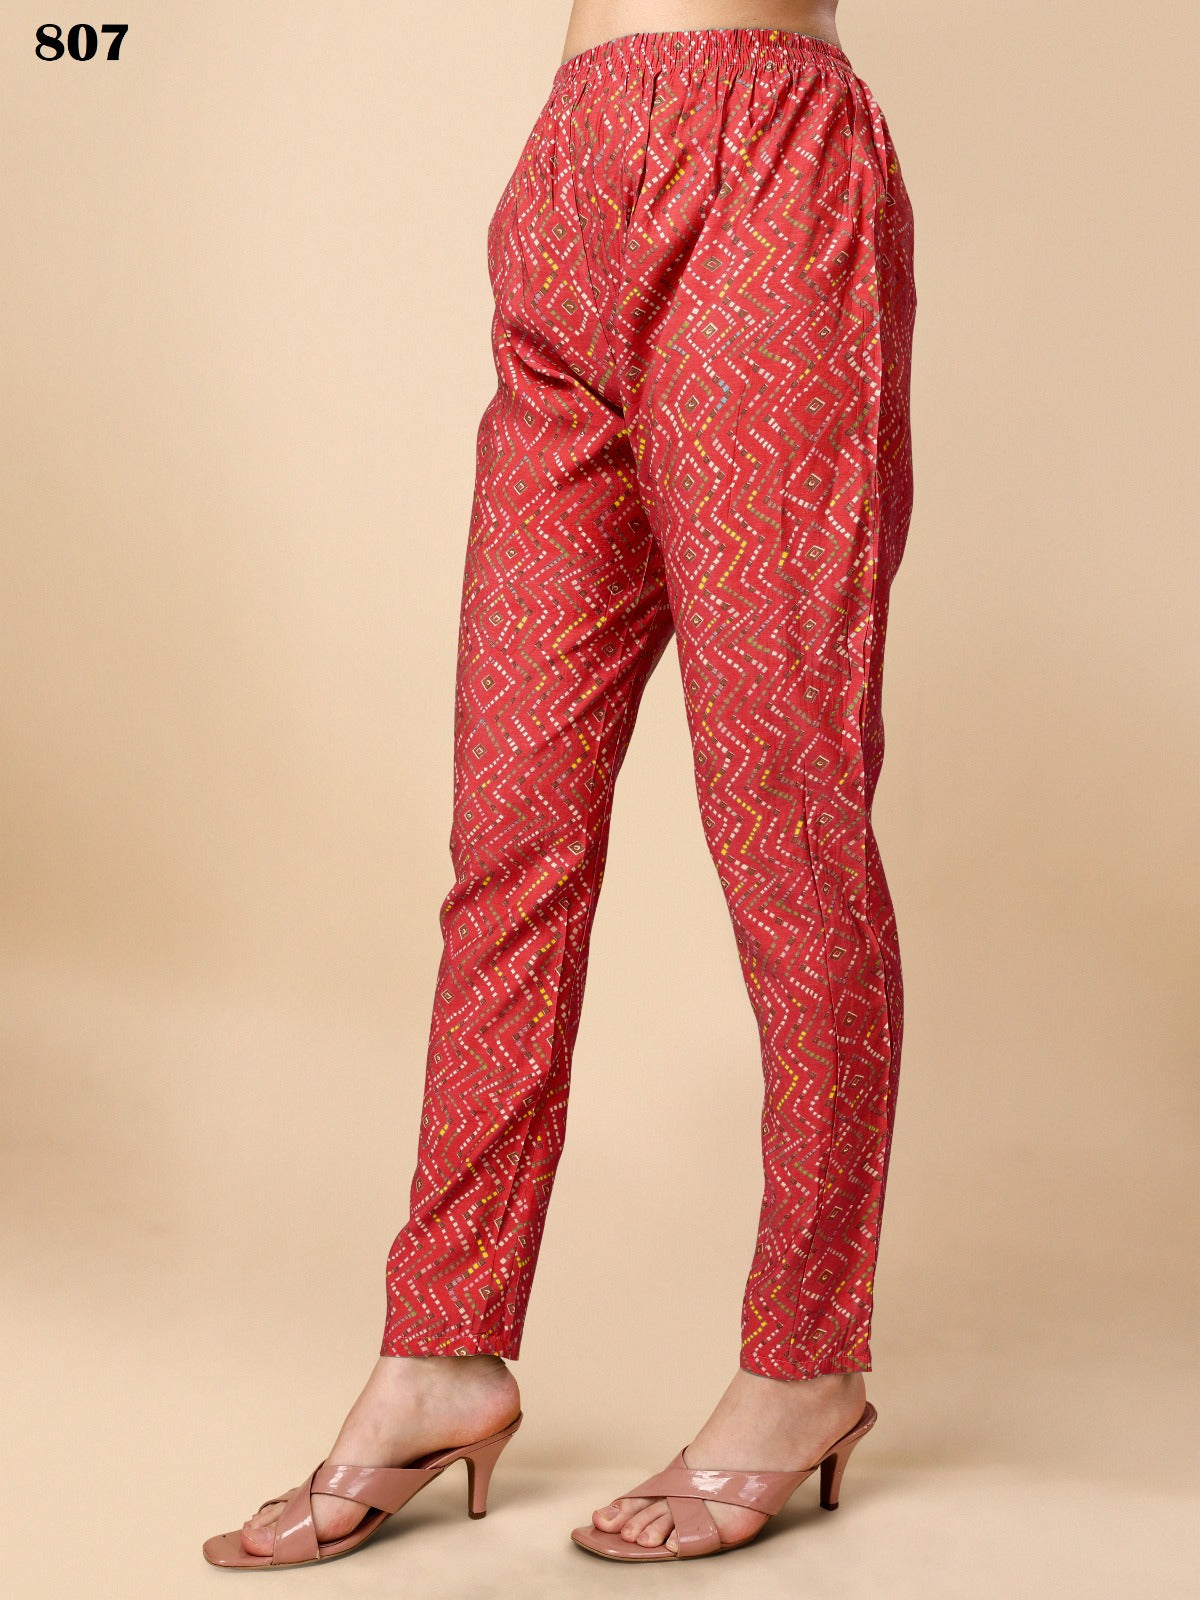 Vol 8 806-807 Beriston Cotton Readymade Pant Style Suits